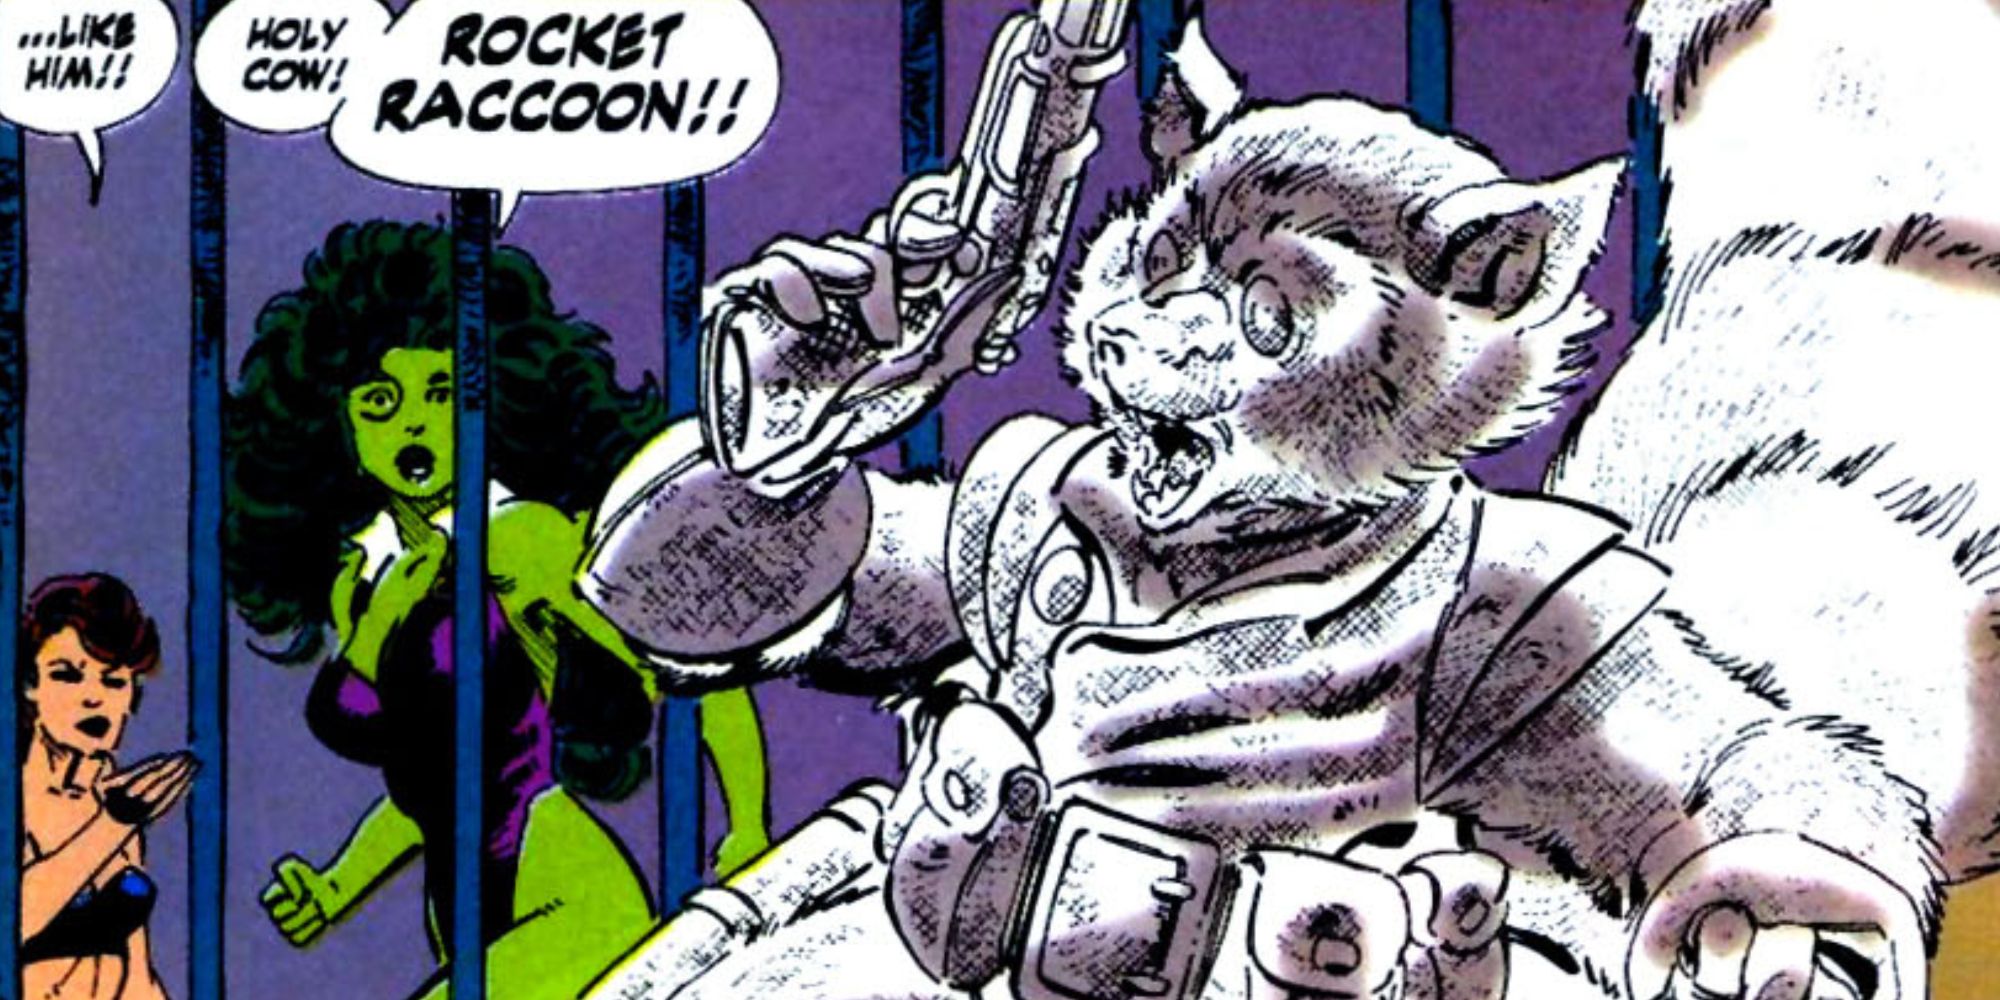 She-Hulk encounters Rocket Raccoon in Marvel Comics.